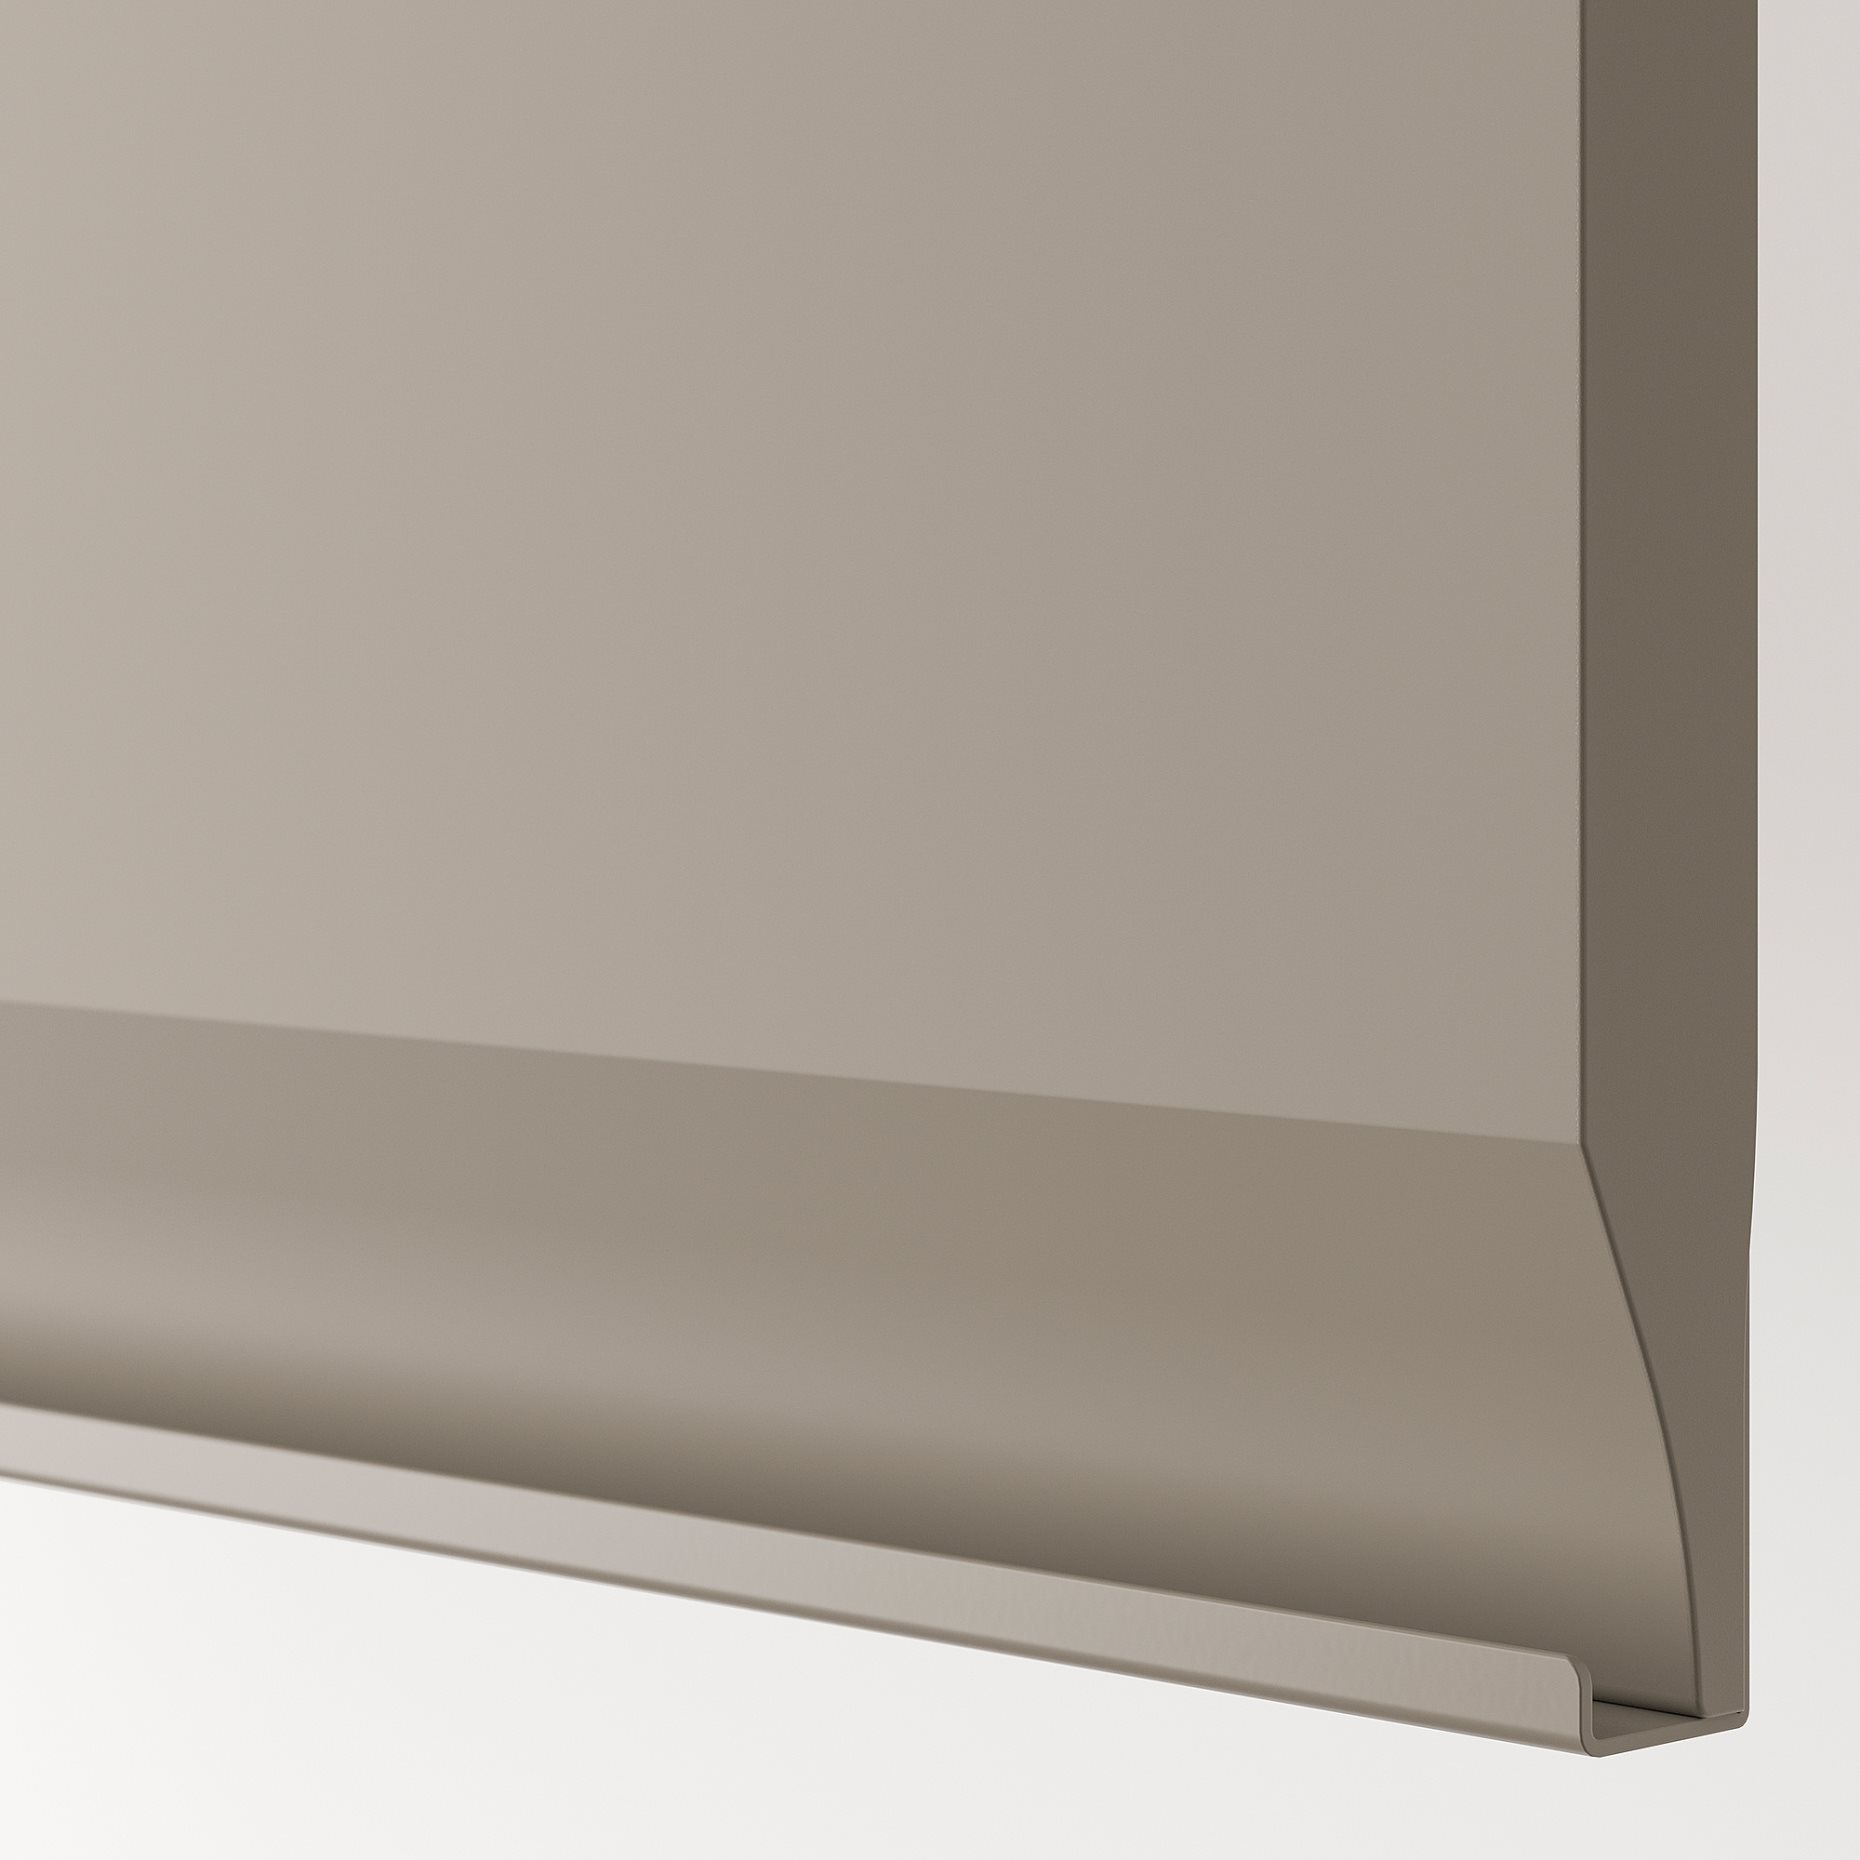 UPPLÖV, 2-piece door for corner base cabinet set/right-hand, 25x80 cm, 804.974.02